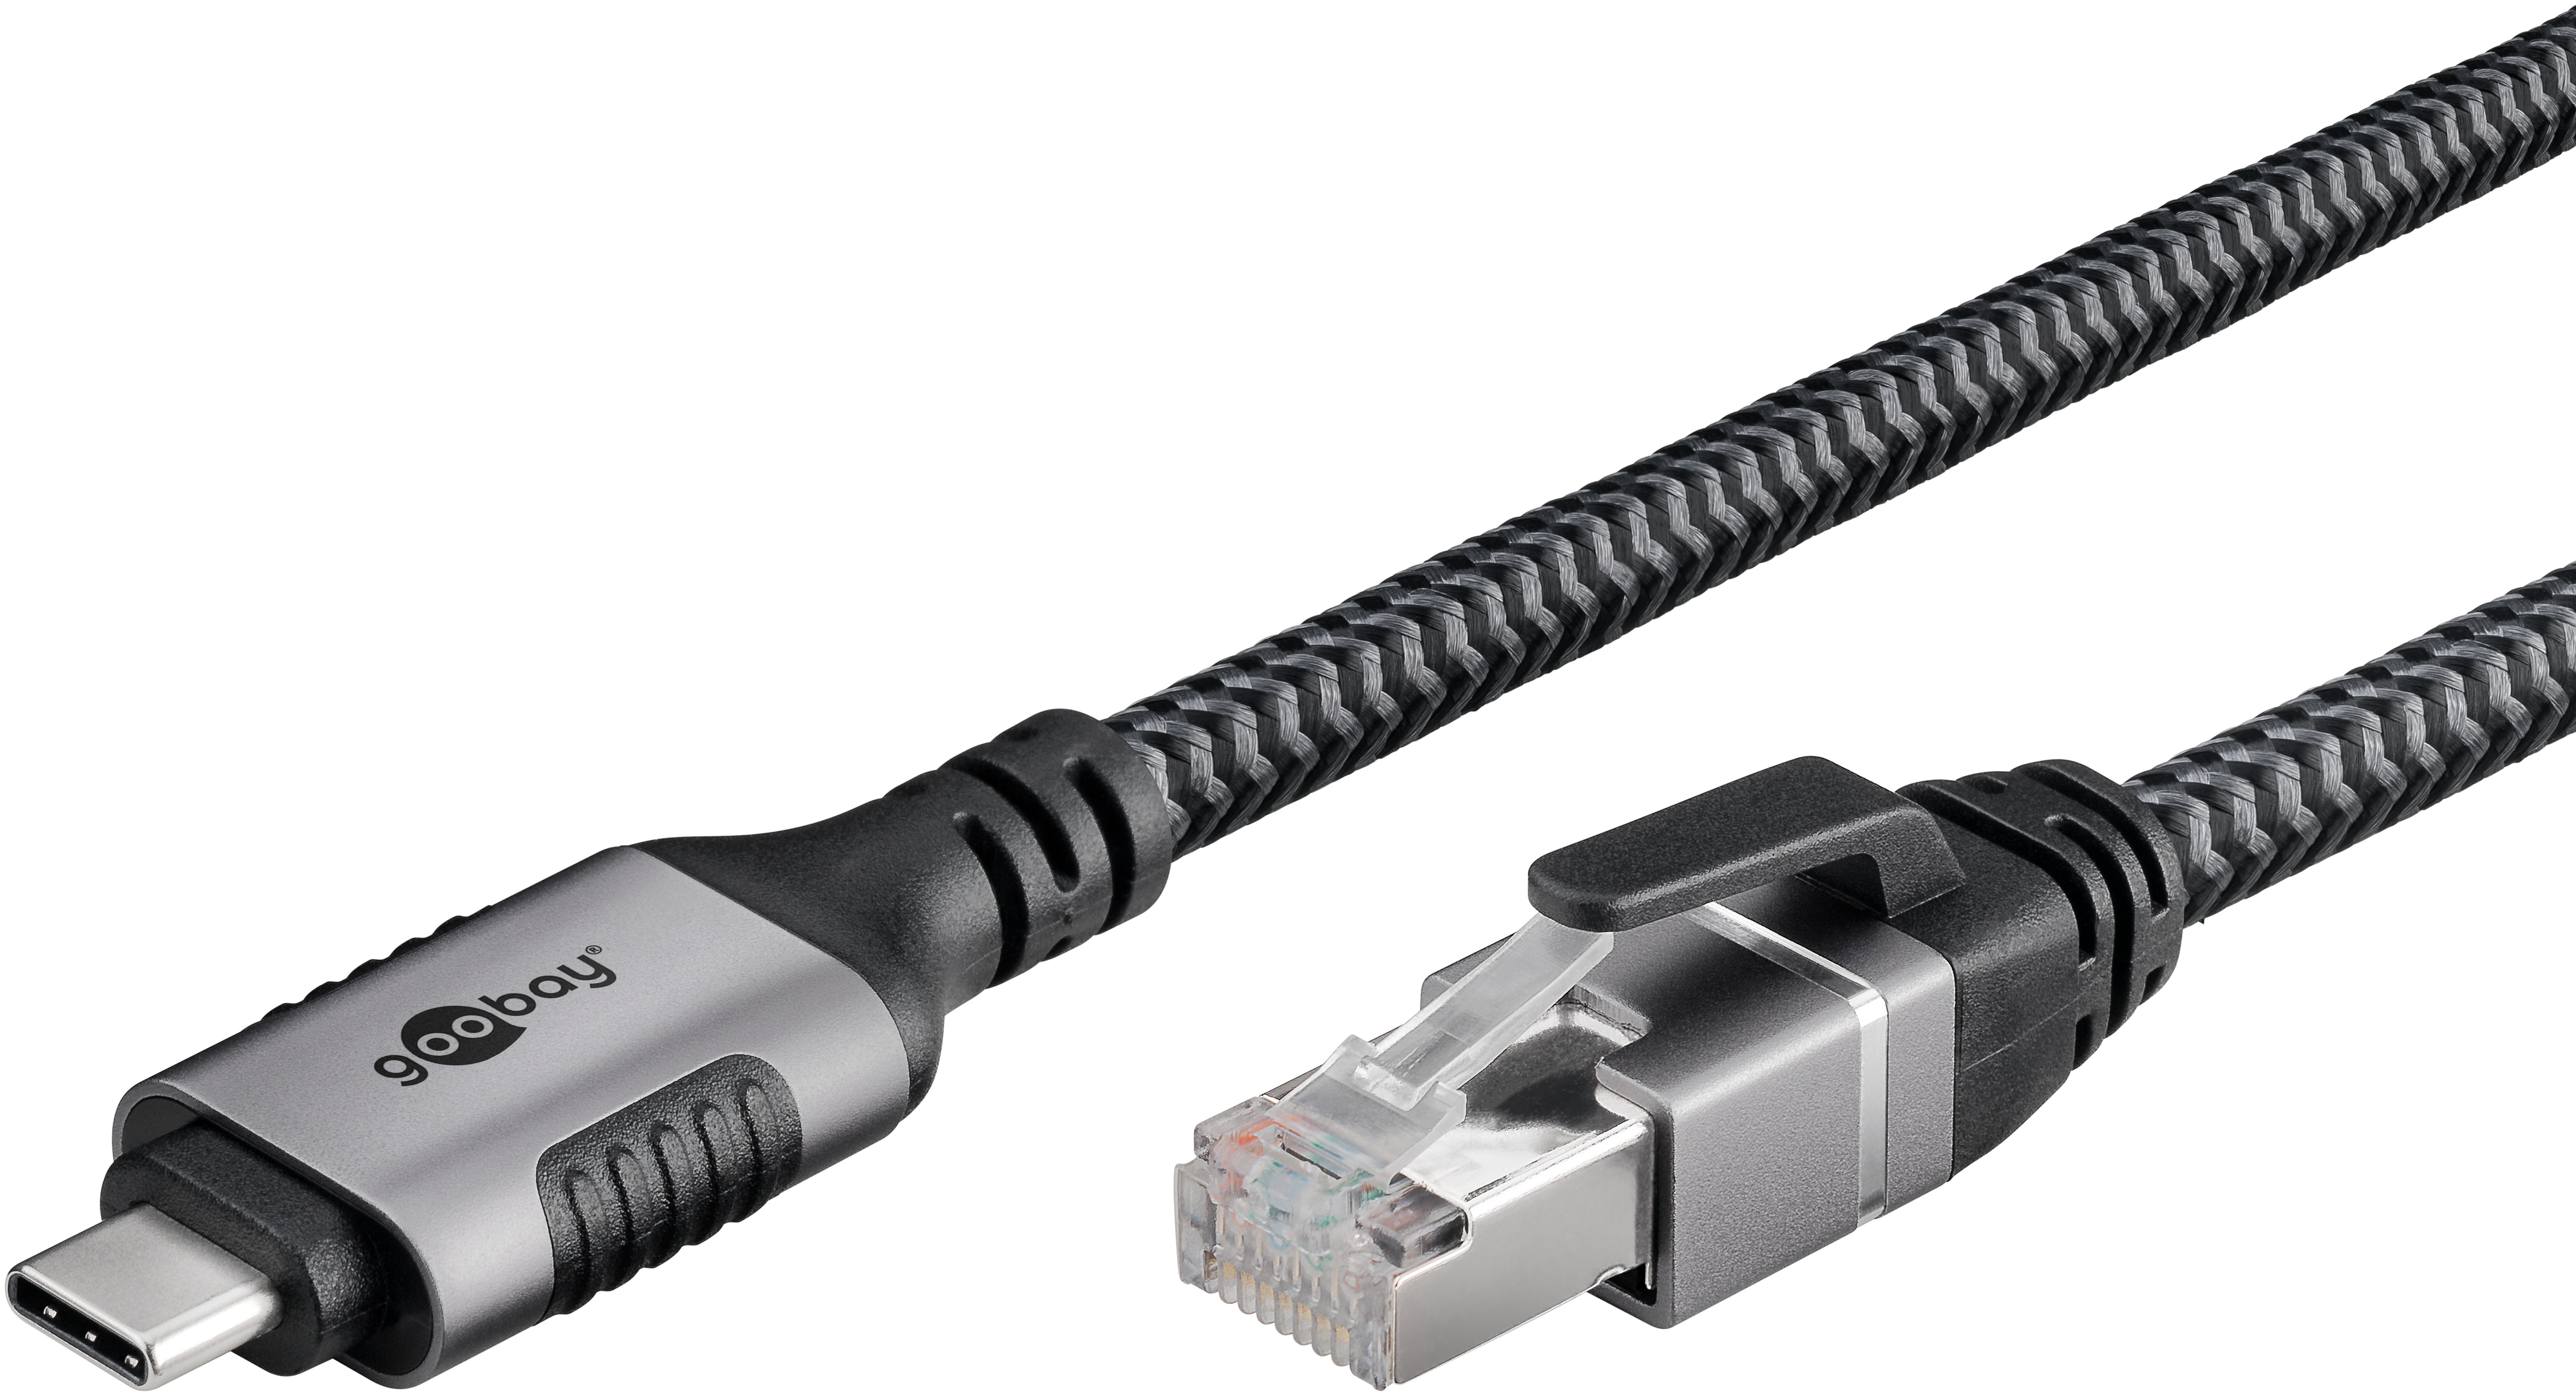 GOOBAY Ethernet-Kabel CAT6 USB-AC 3.1 auf RJ45 5m